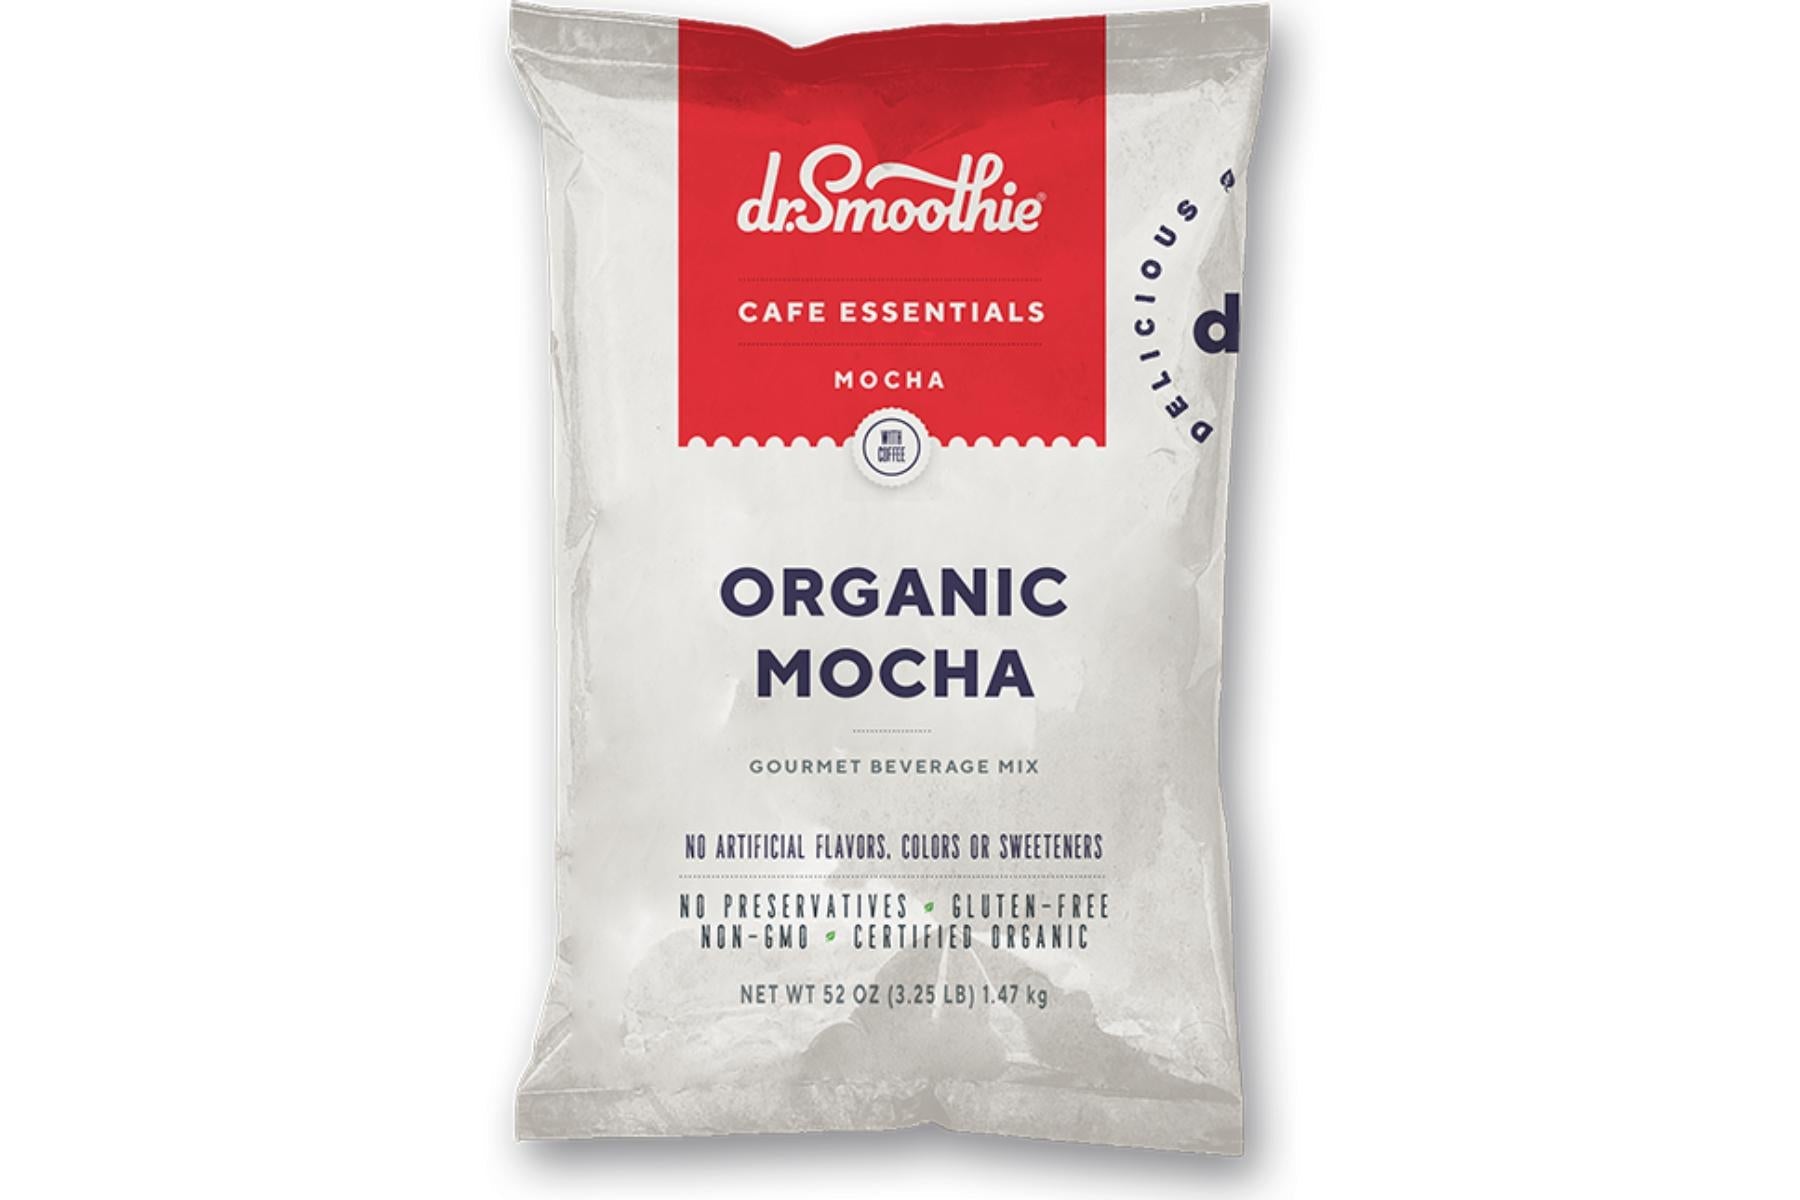 Dr. Smoothie Cafe Essentials Mocha - 3.5lb Bulk Bag: Organic Mocha